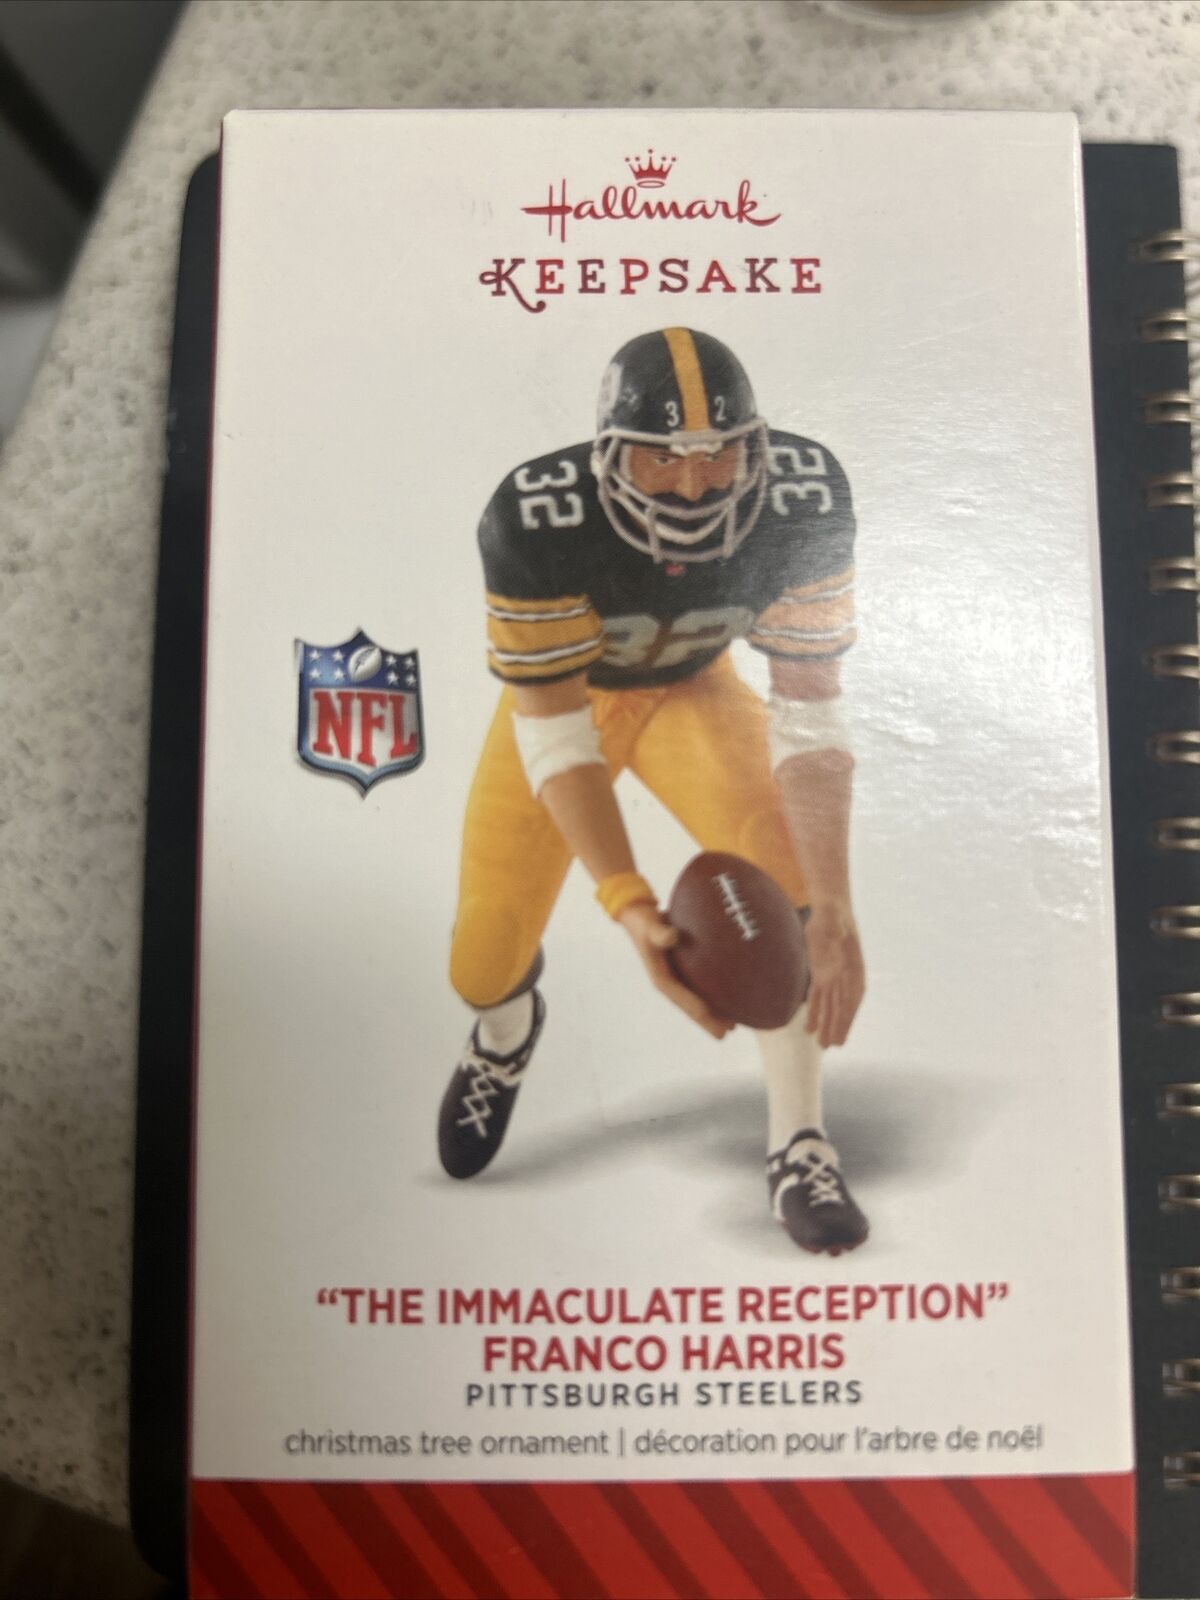 Franco Harris THE IMMACULATE RECEPTION Steelers NFL Hallmark Keepsake Ornament